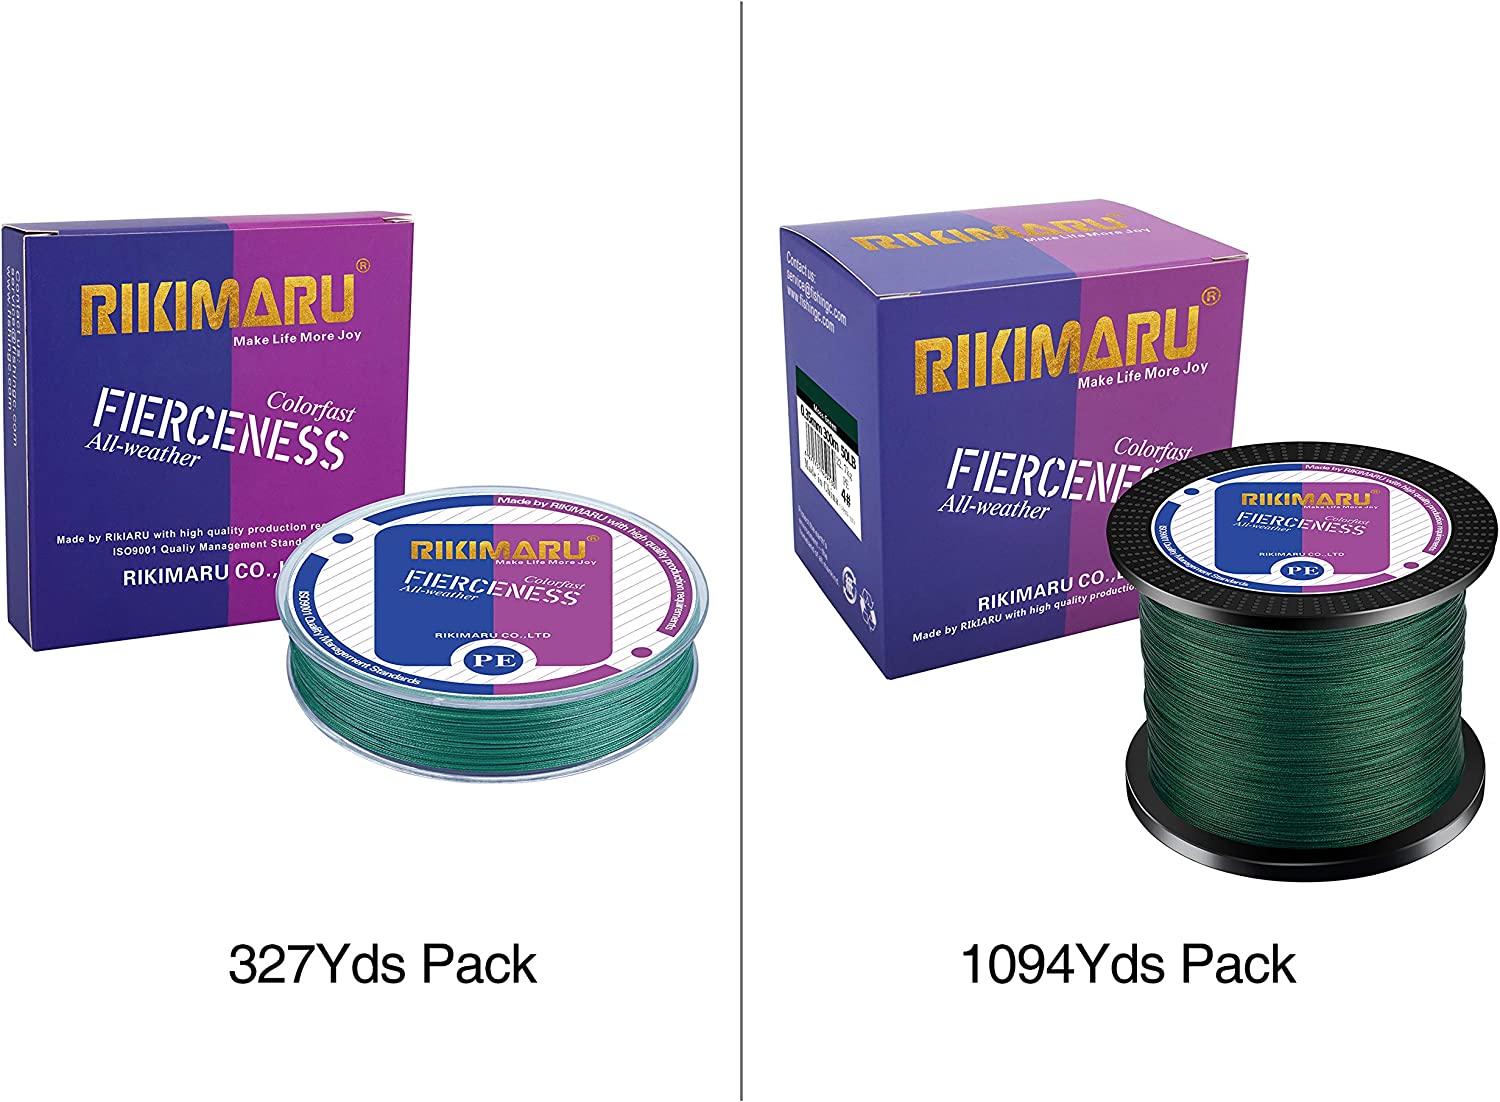 RIKIMARU - Gears Brands